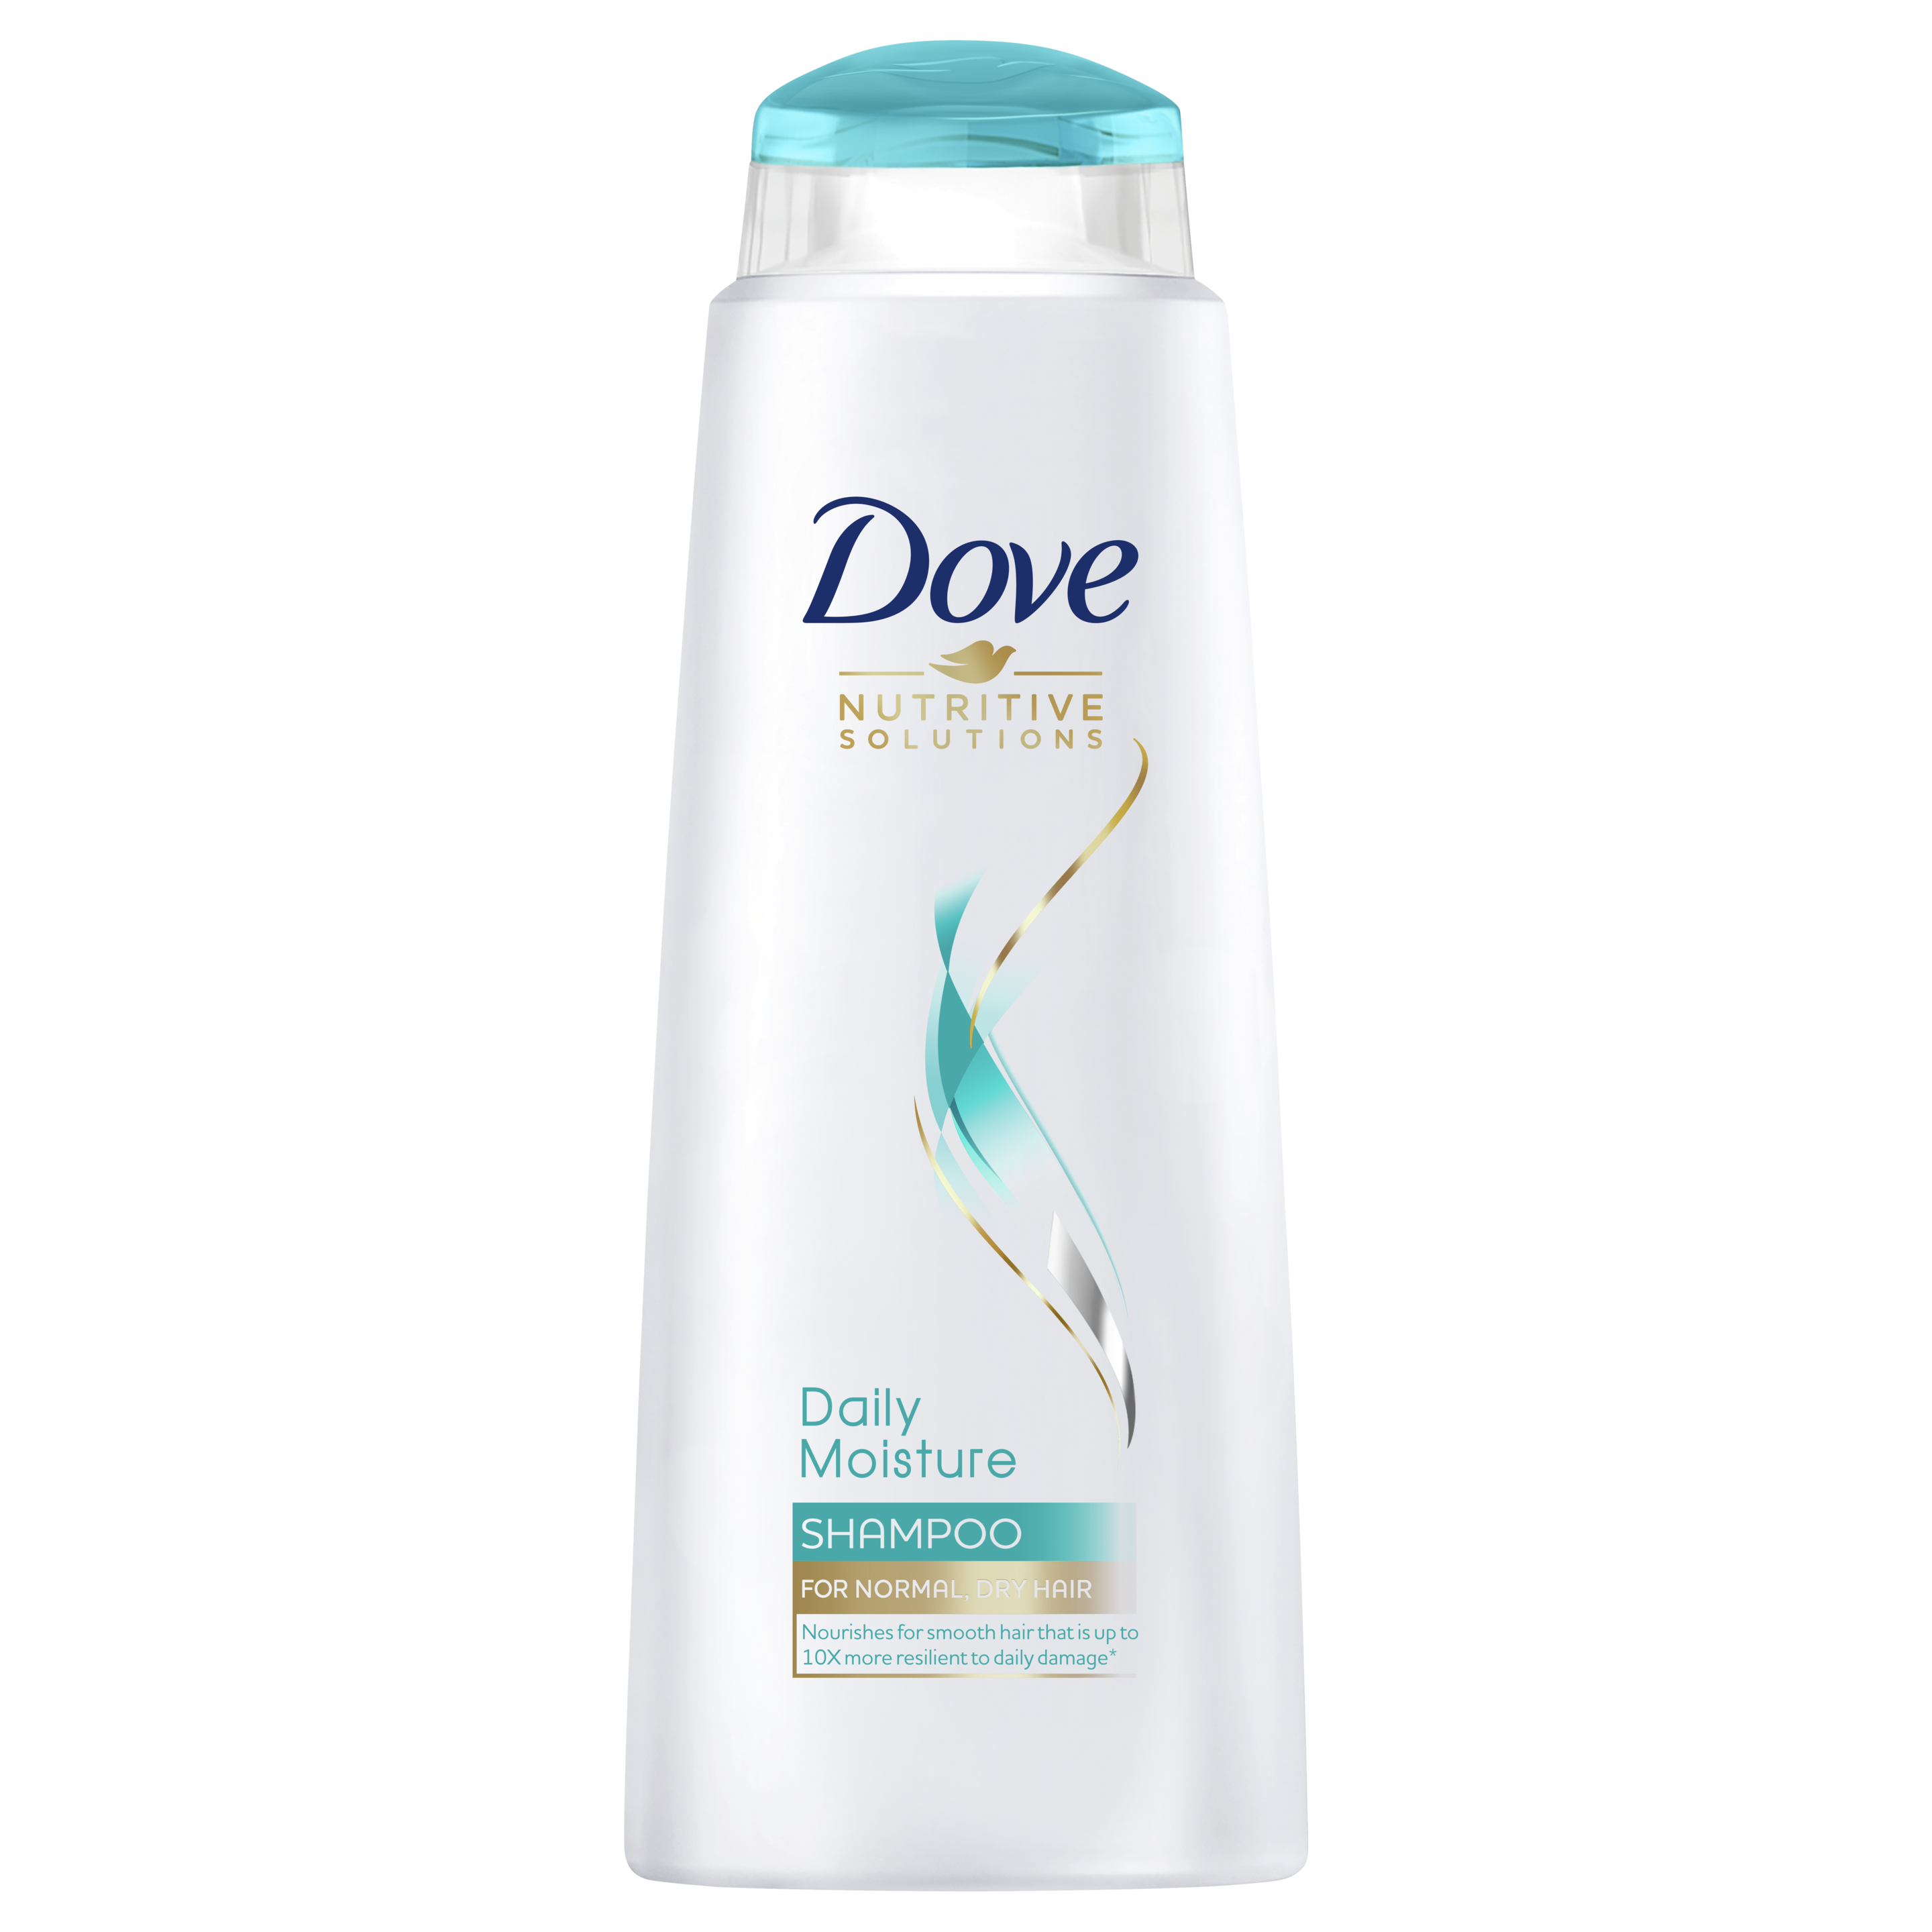 Dove Nutritive Solutions Daily Moisture Shampoo 400ml